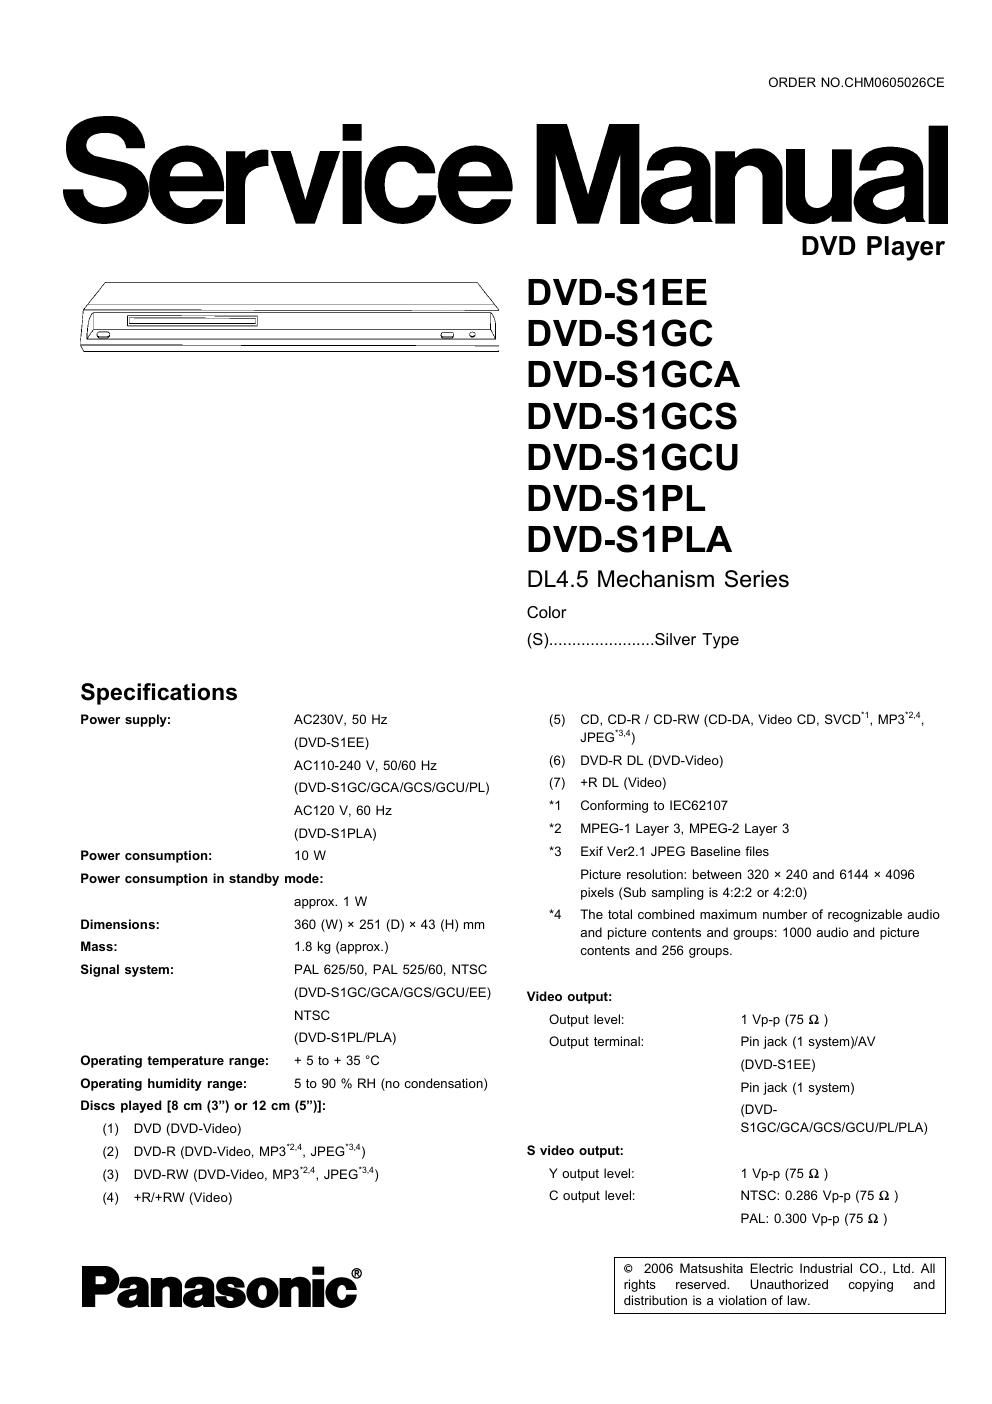 panasonic dvd s 1 gcu service manual